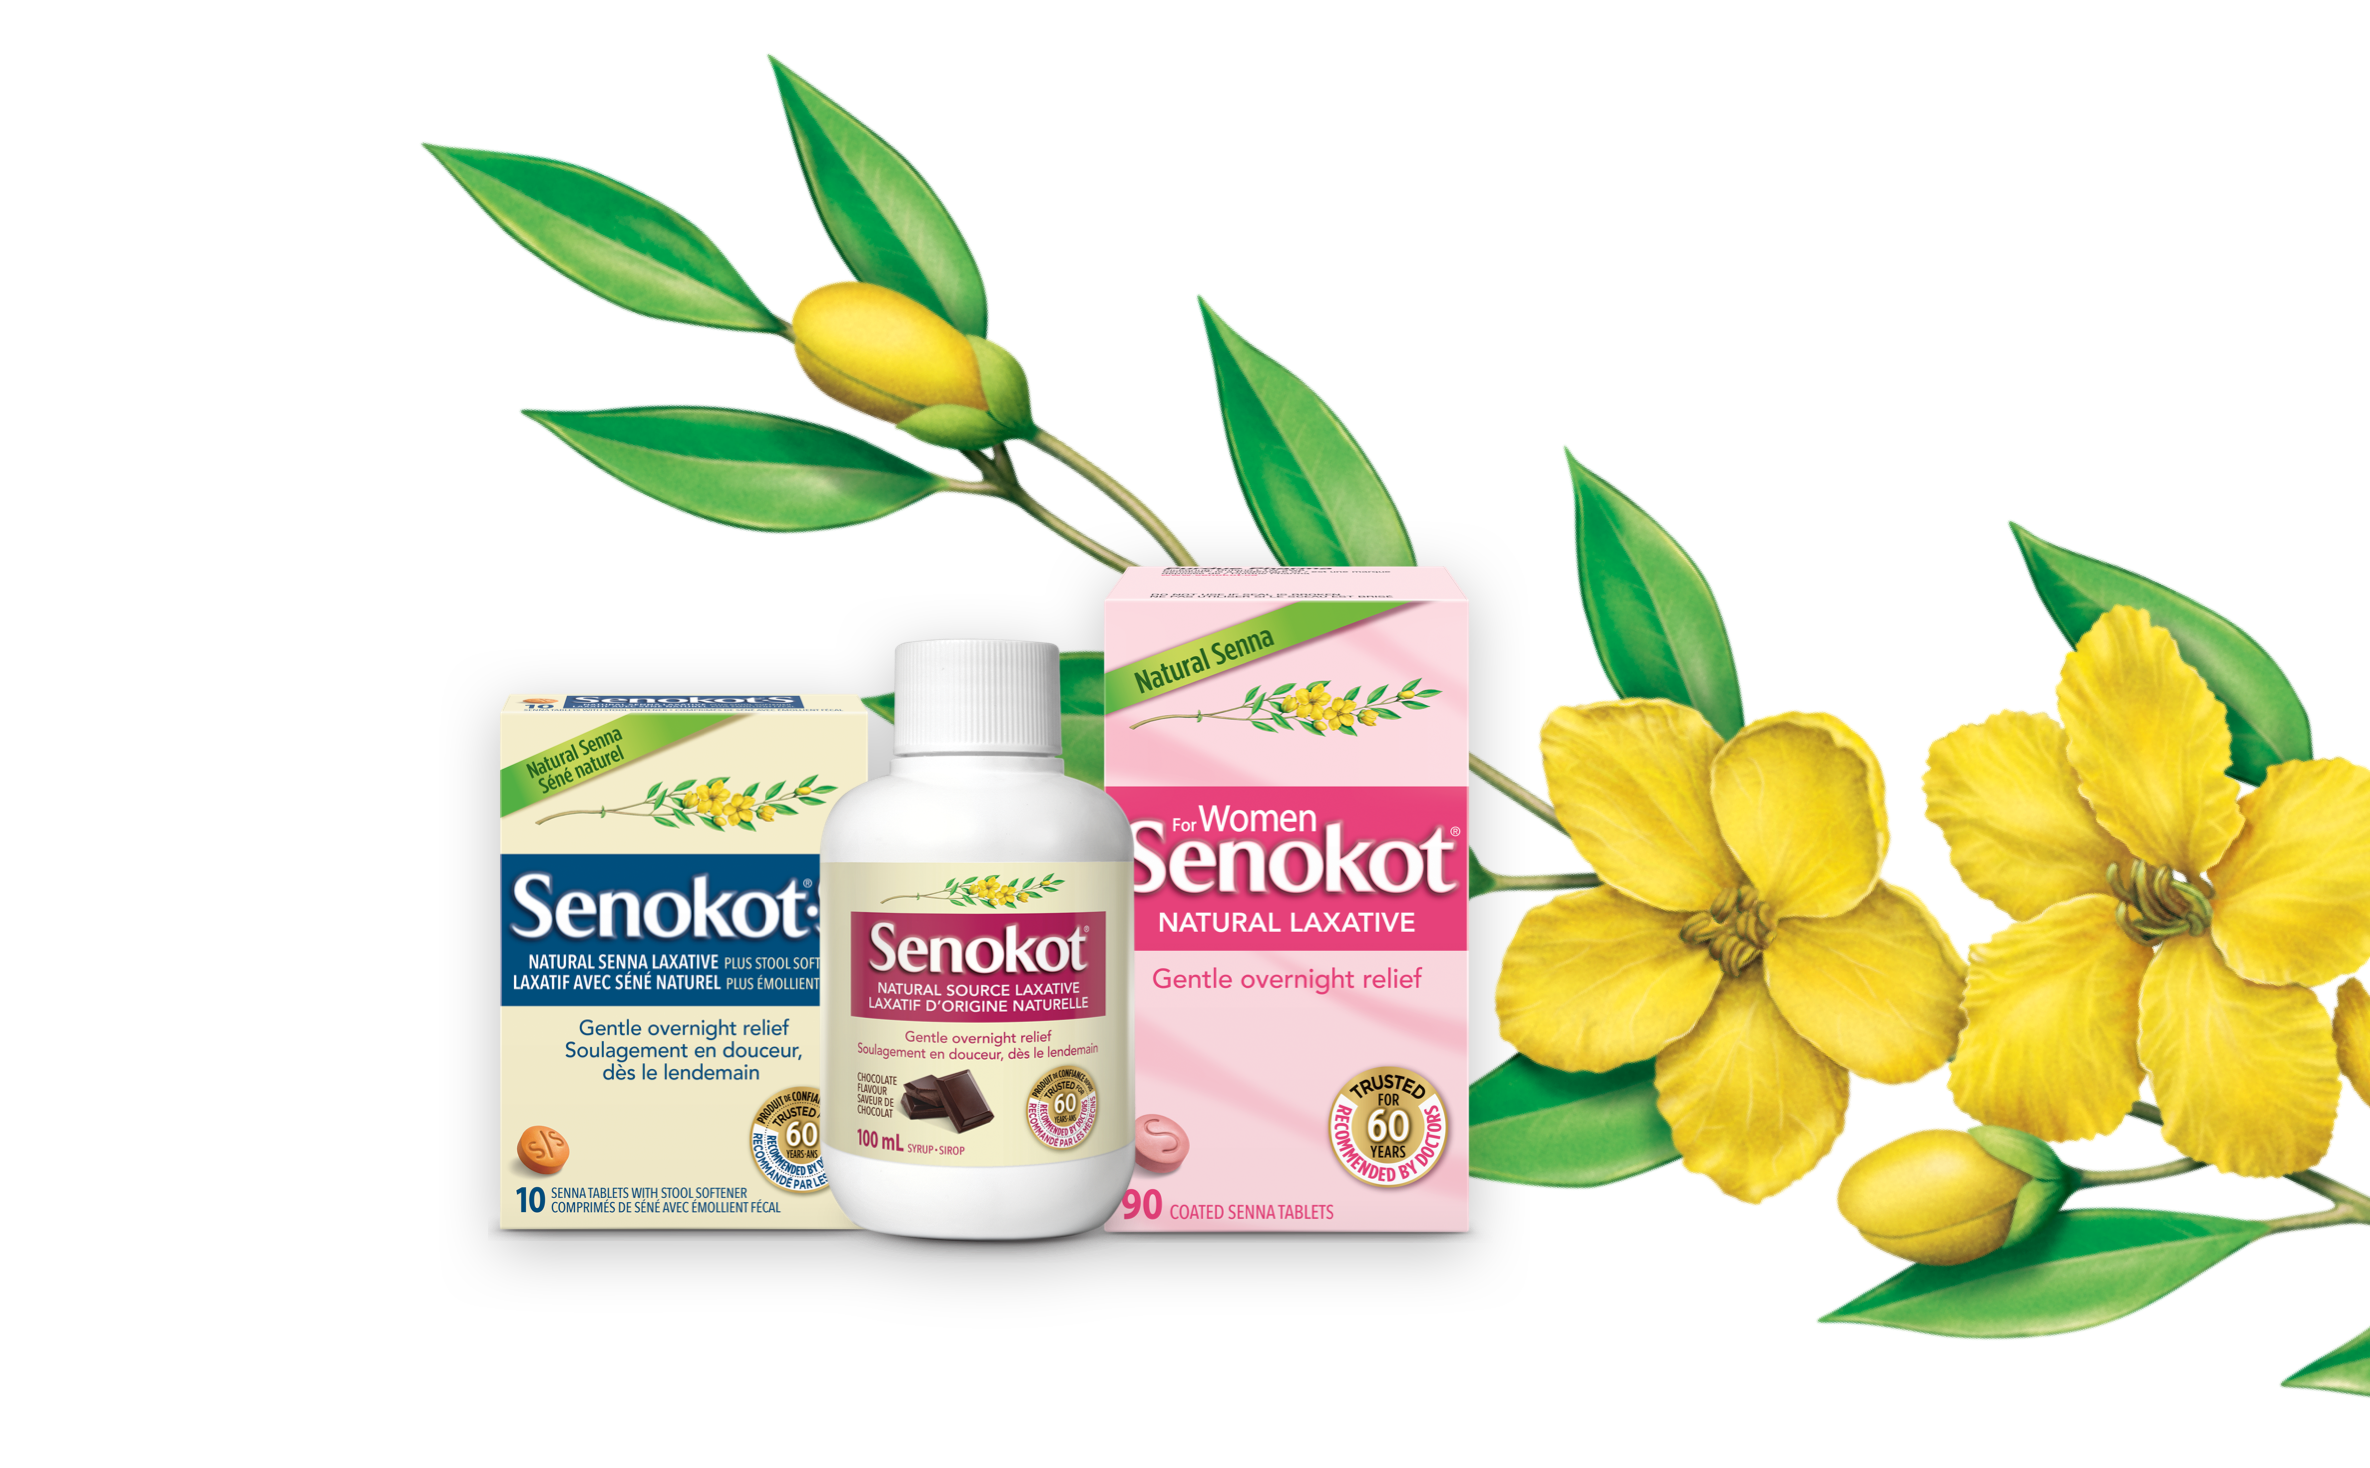 Senokot product shots, senna flower